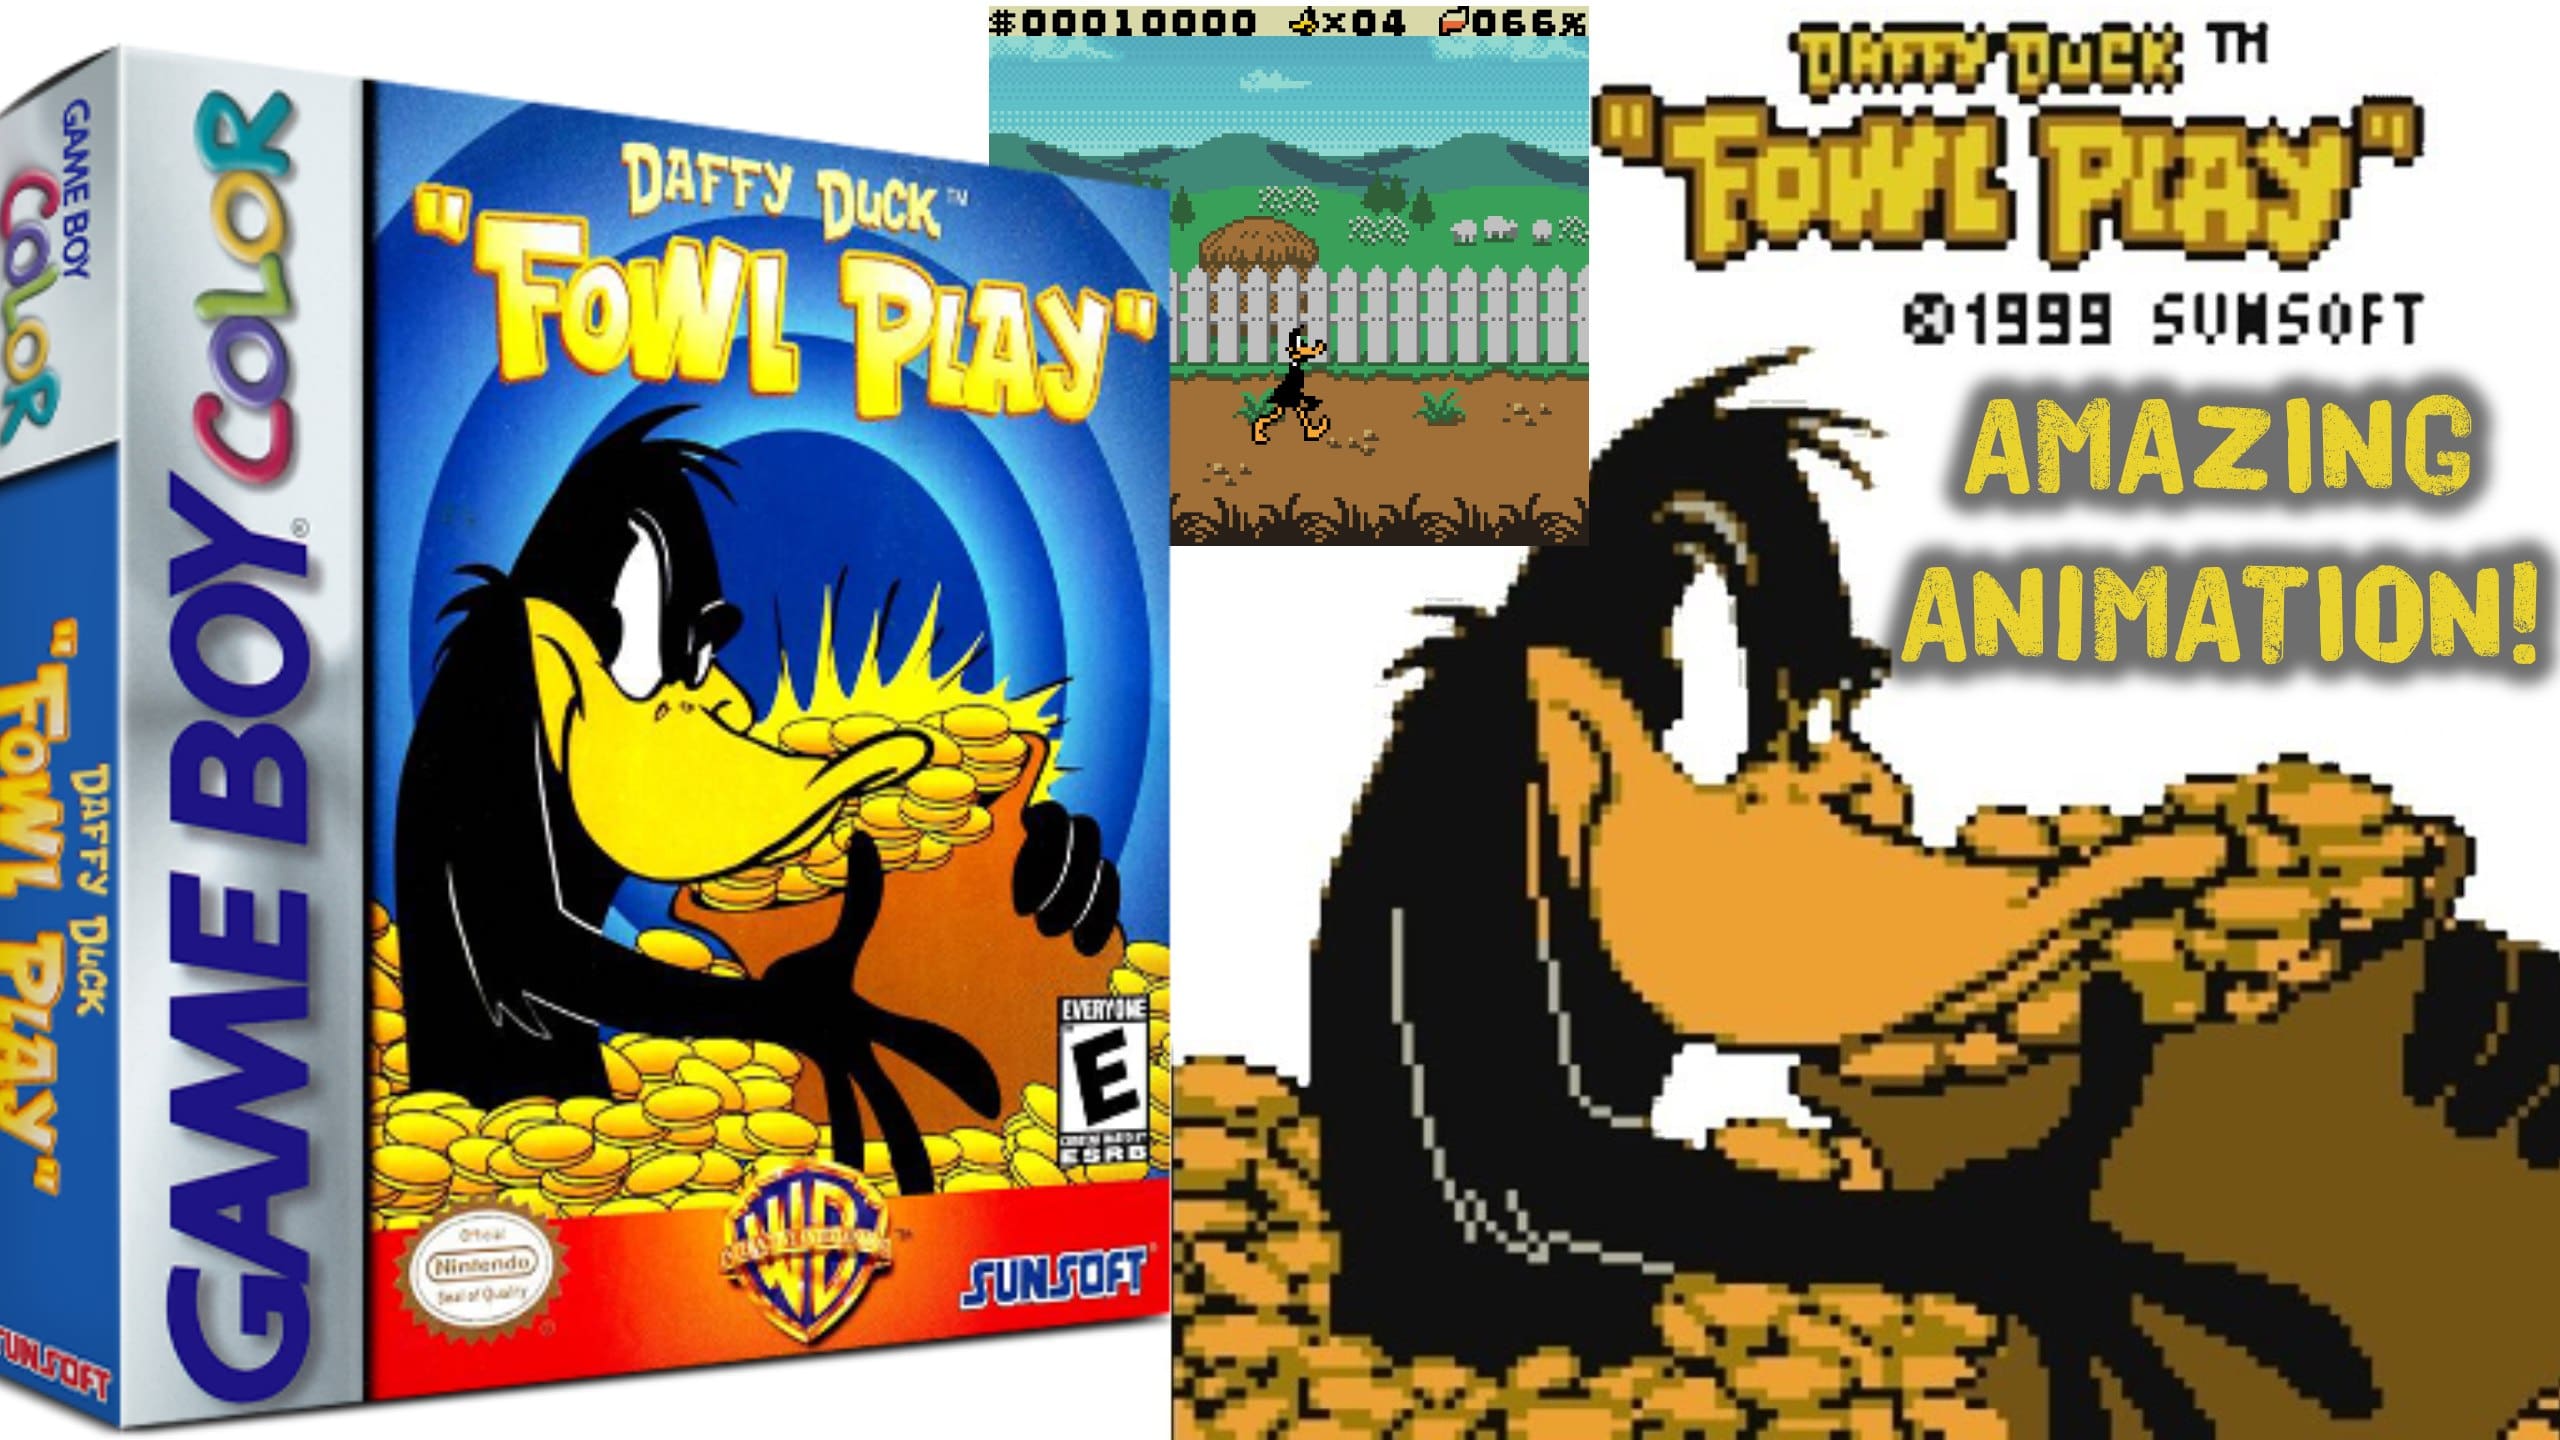 Daffy Duck Fowl Play banner